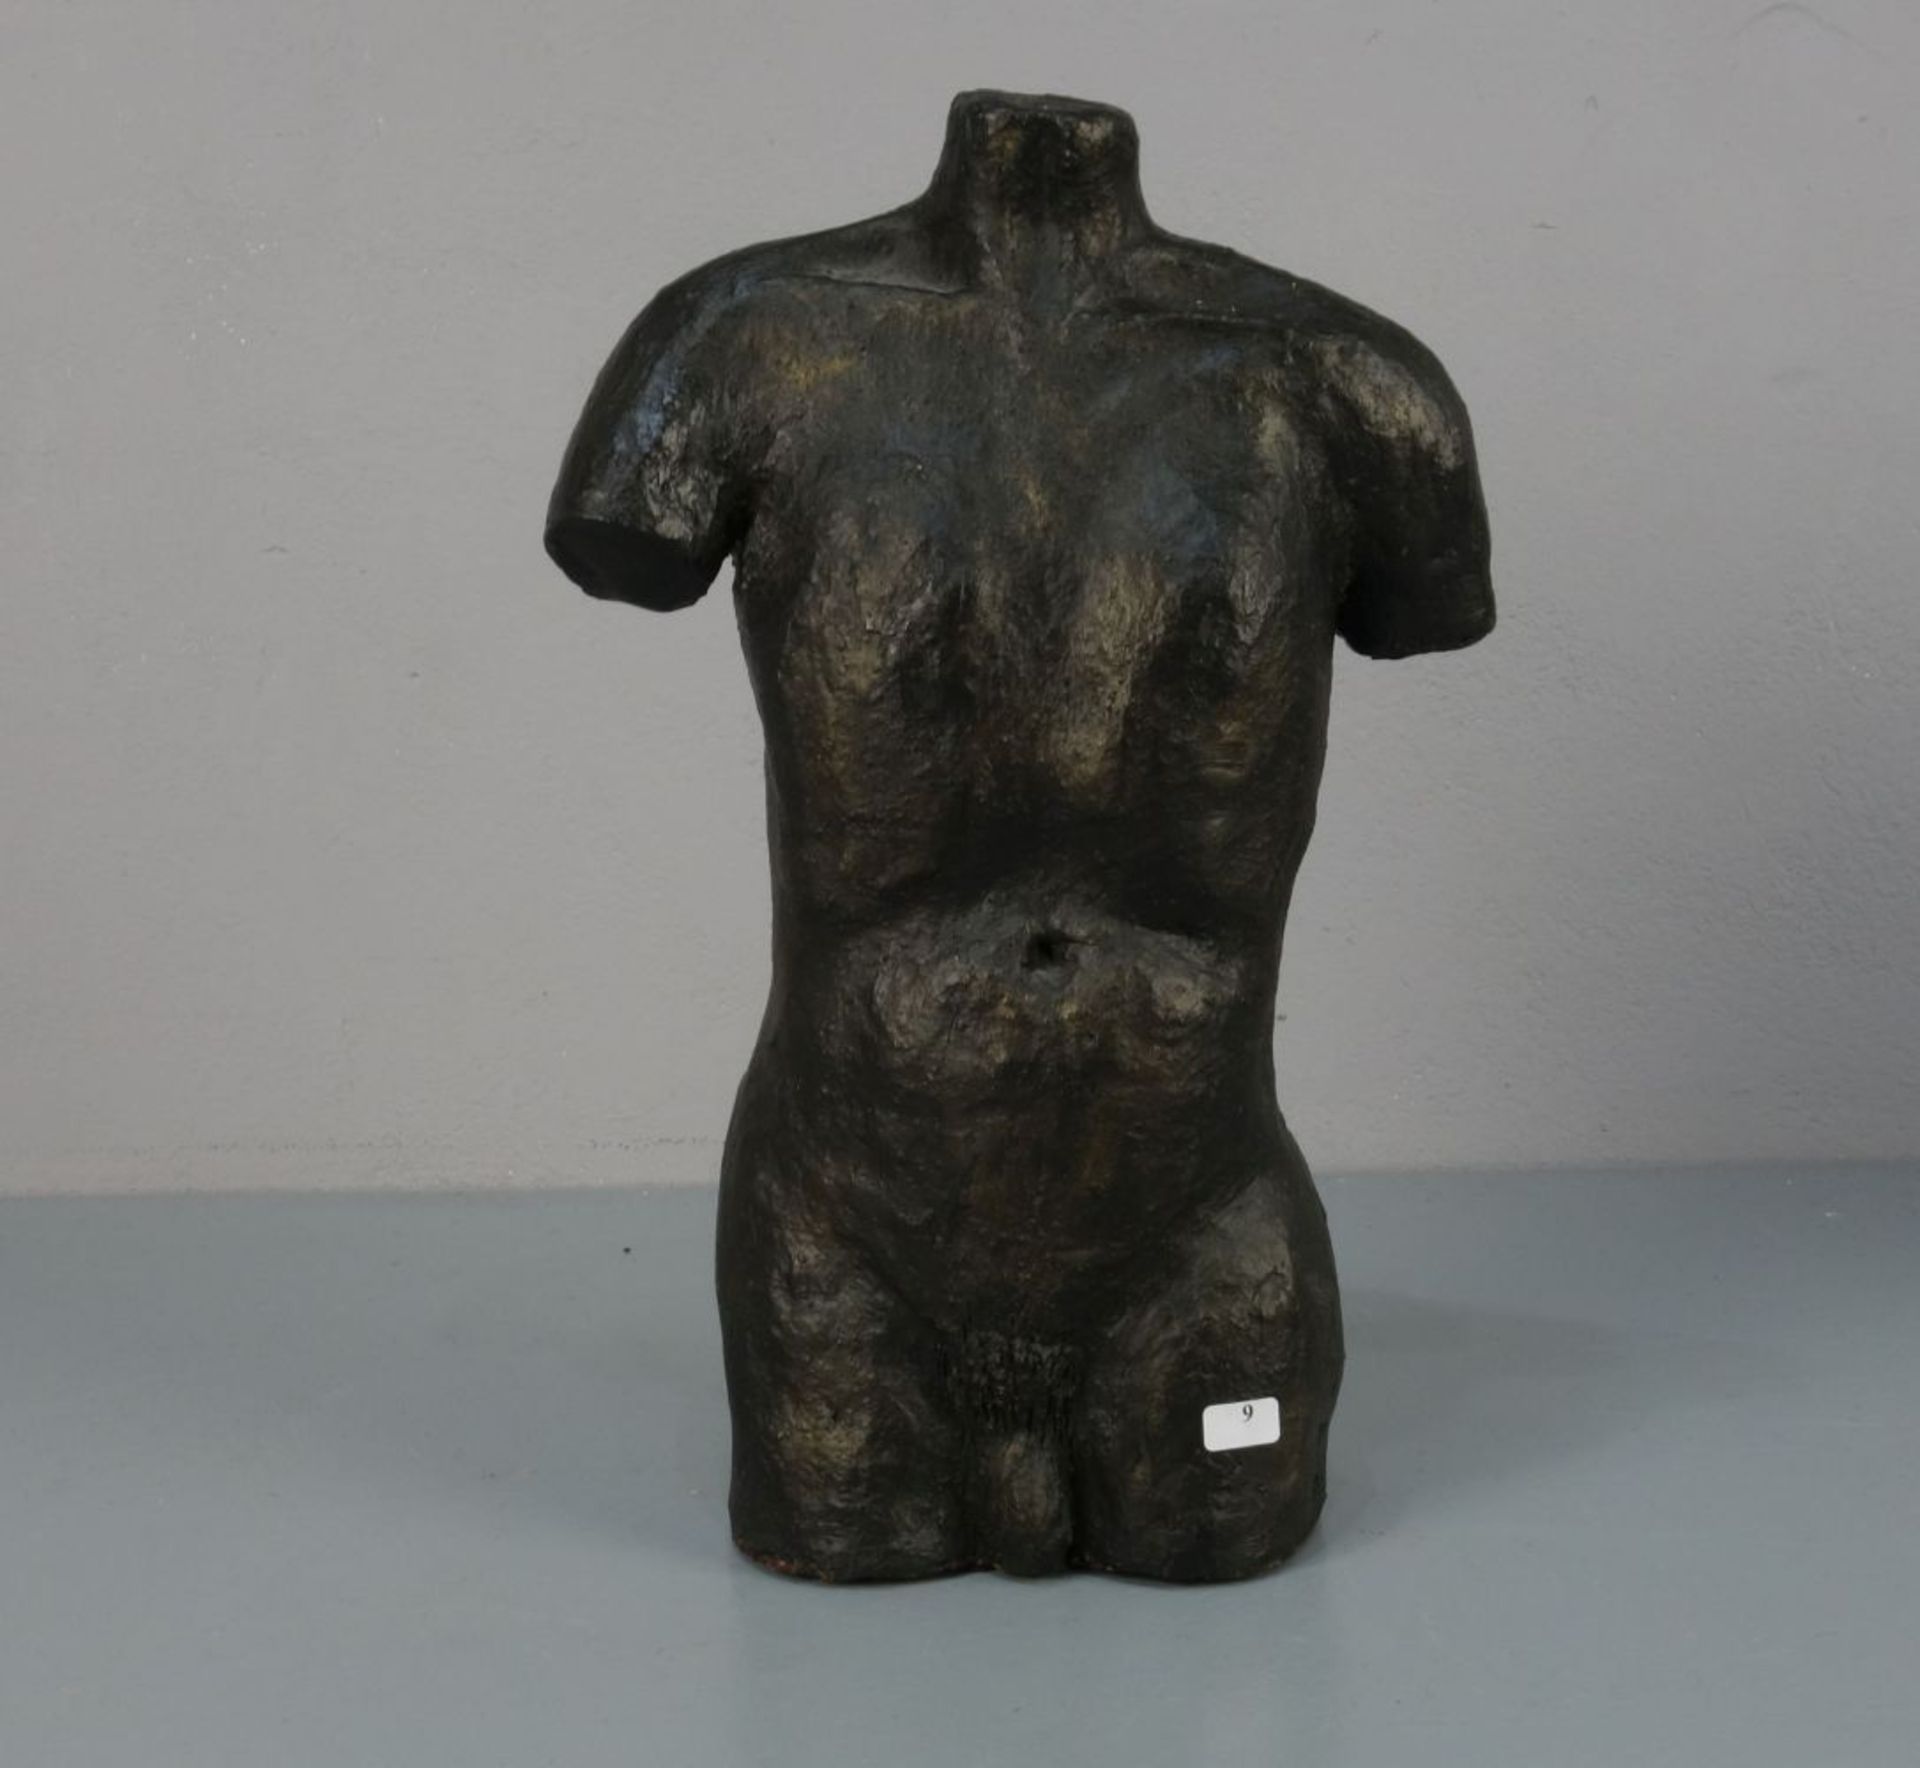 BILDHAUER / KERAMIKER DES 20./21. Jh.: Skulptur / sculpture: "Männlicher Torso", Keramik,